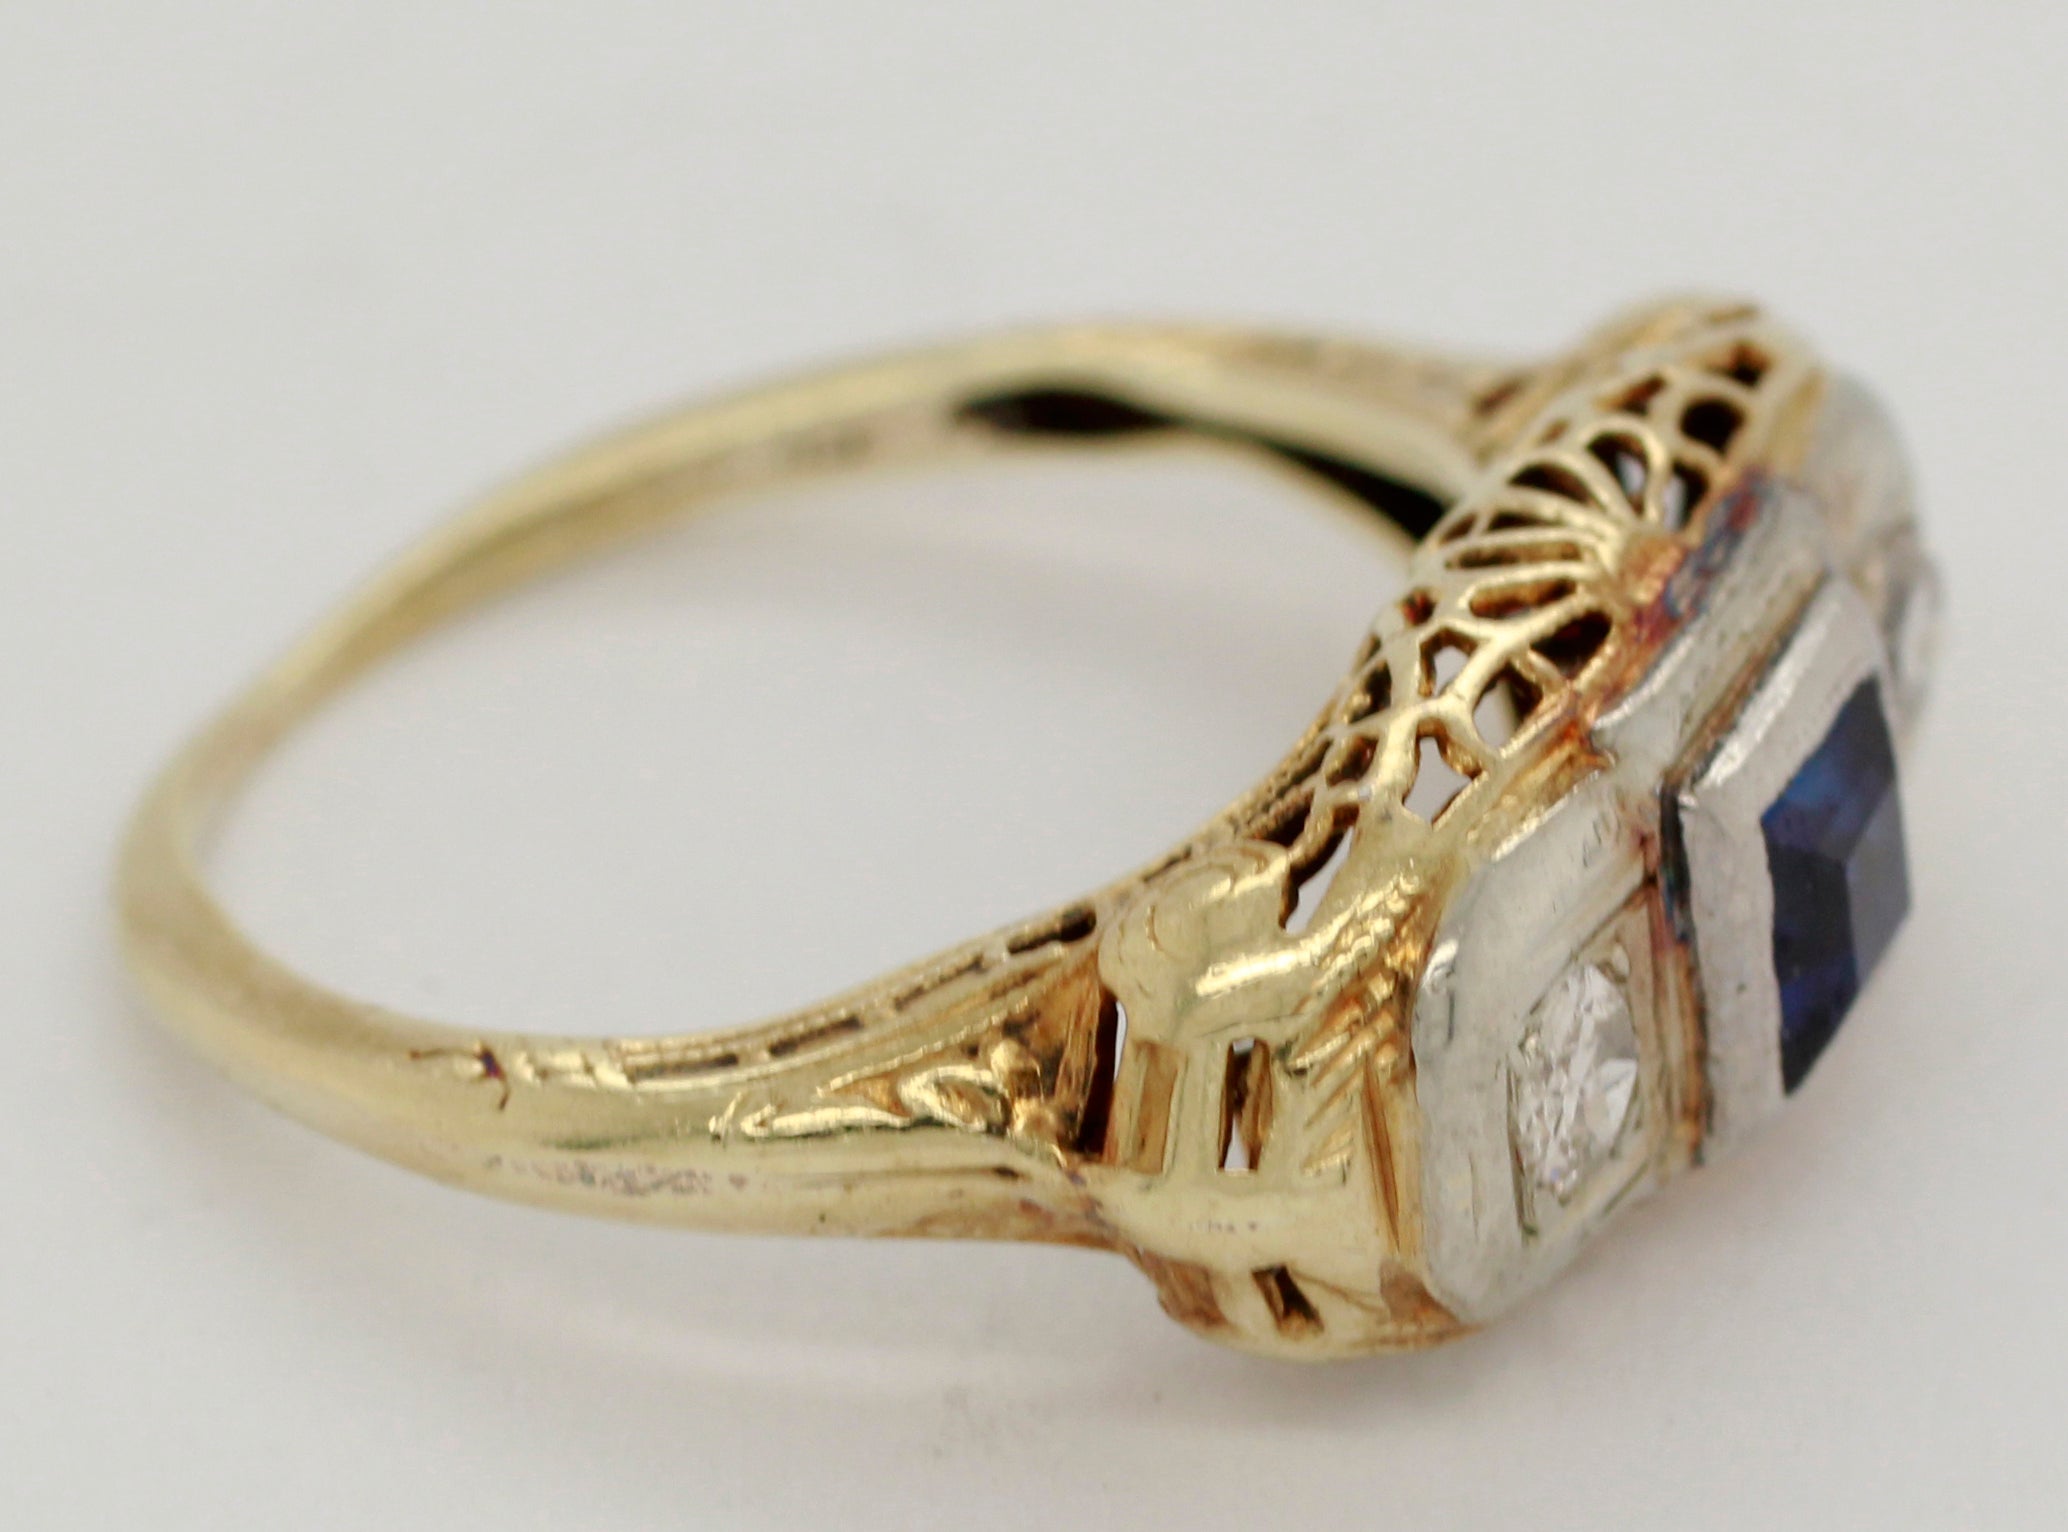 Antique Art Deco 0.30ctw Sapphire & Diamond Filigree Band Ring - 14k Yellow Gold